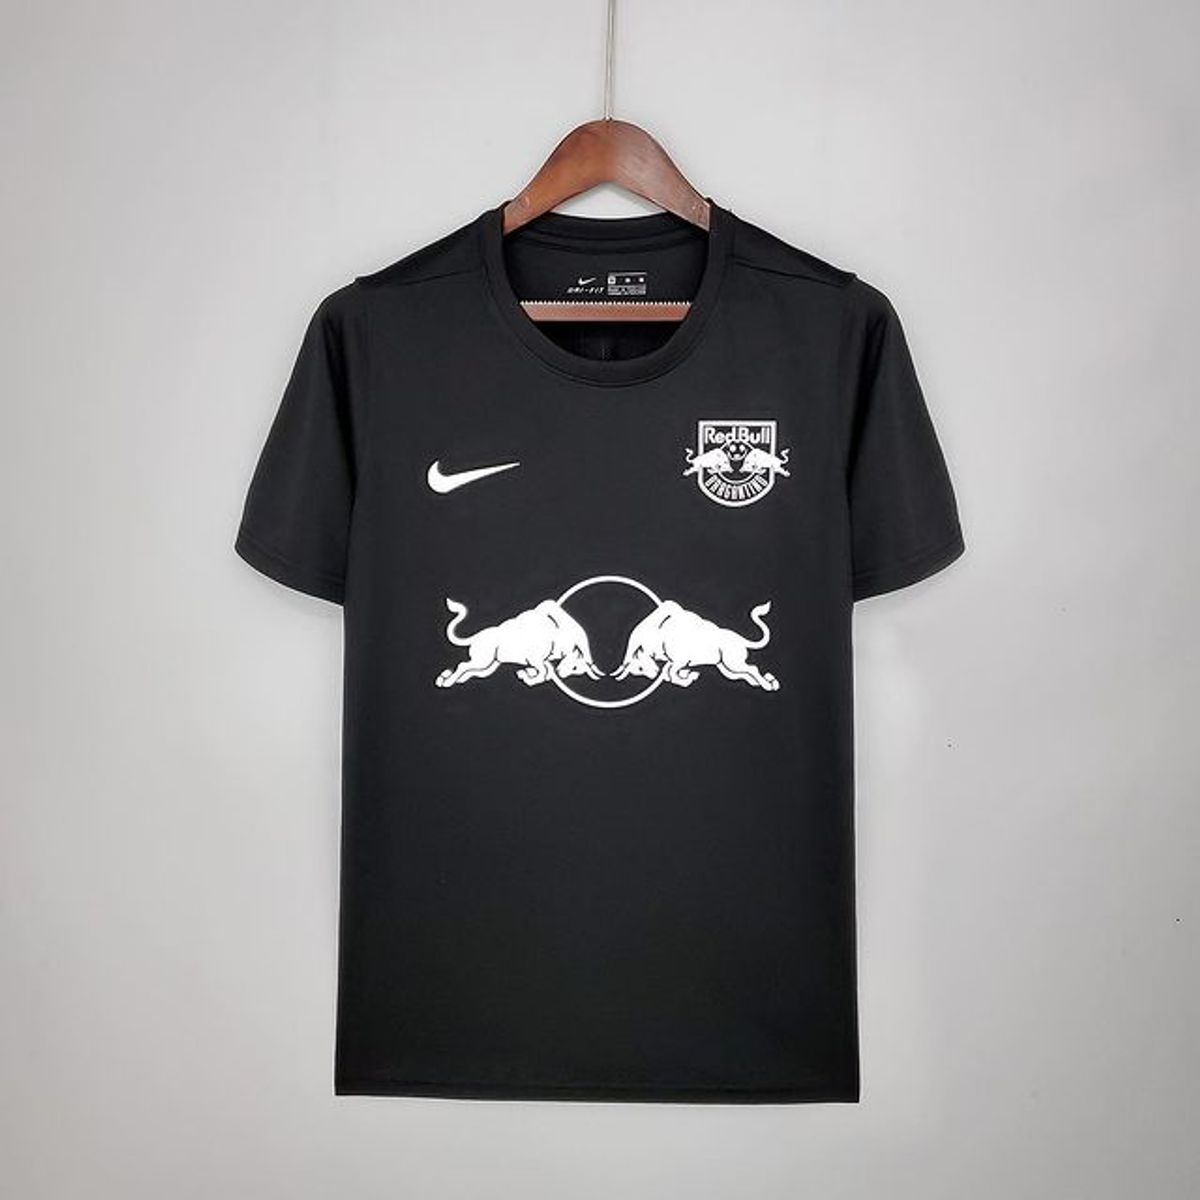 Camisa Rb Bragantino Nova Preta Original 2021/22 Camisa Masculina